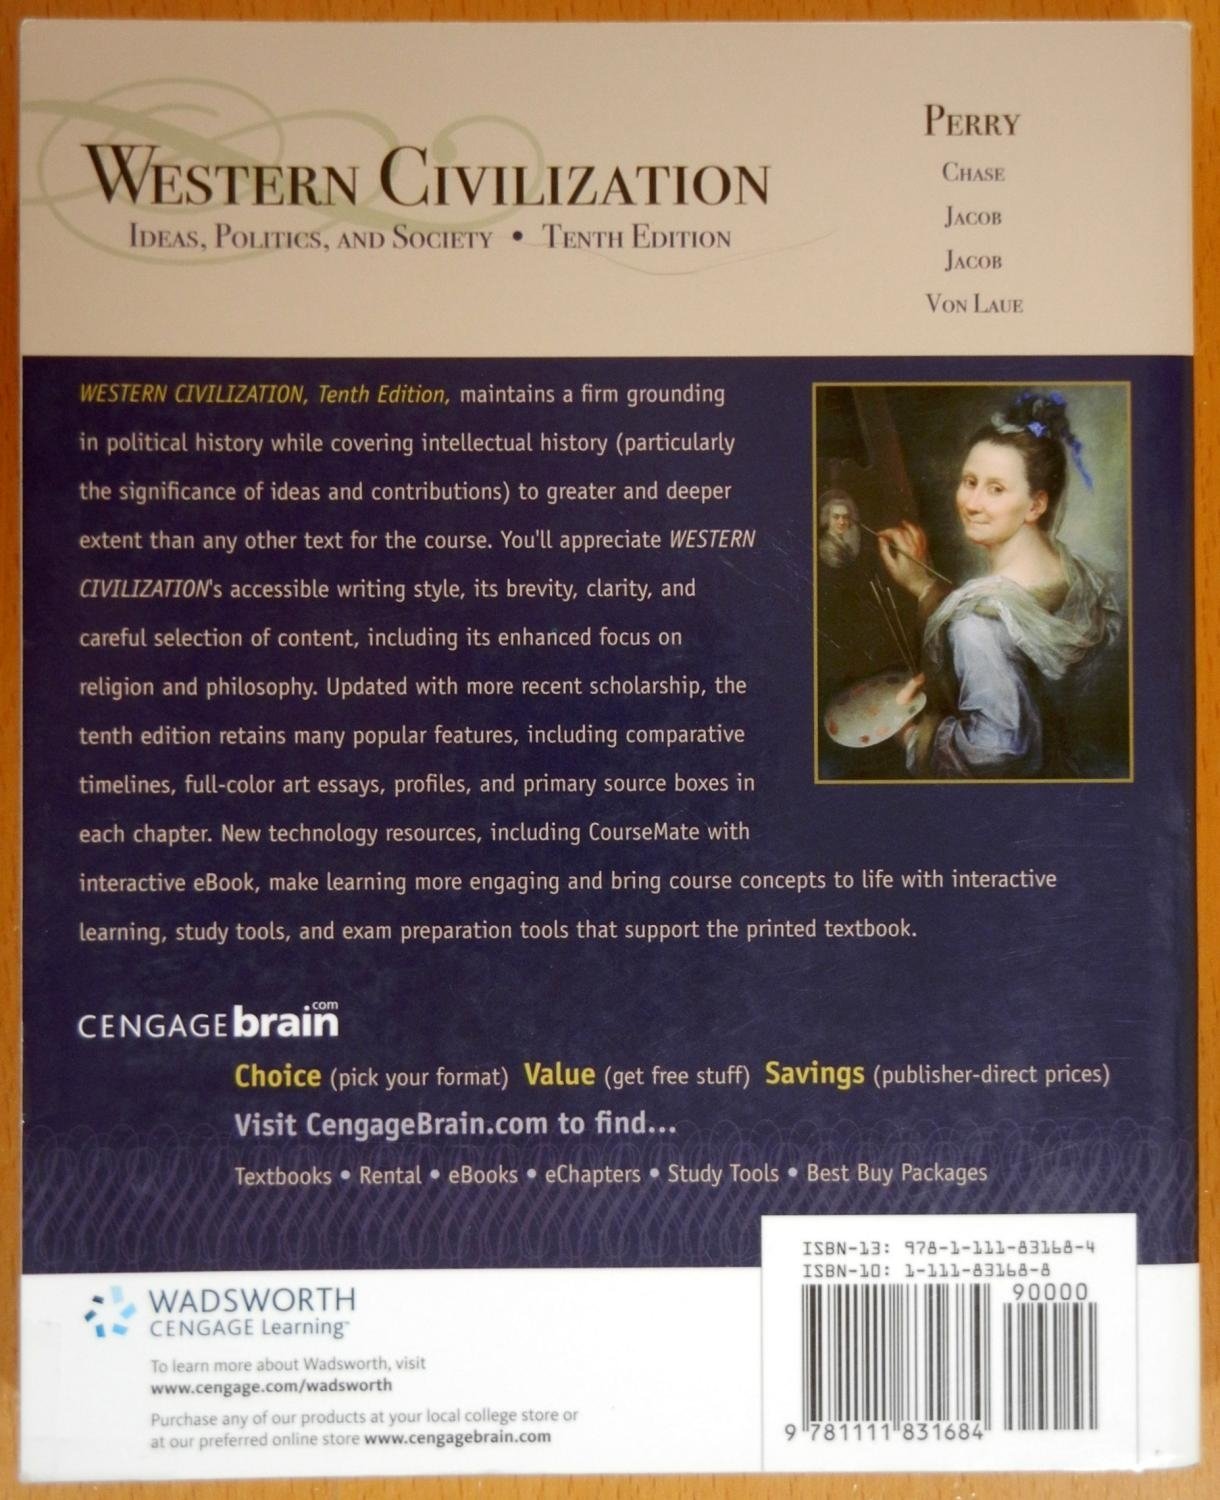 10 Stylish Western Civilization Ideas Politics And Society western civilization ideas politics and society tenth edition 2 2022